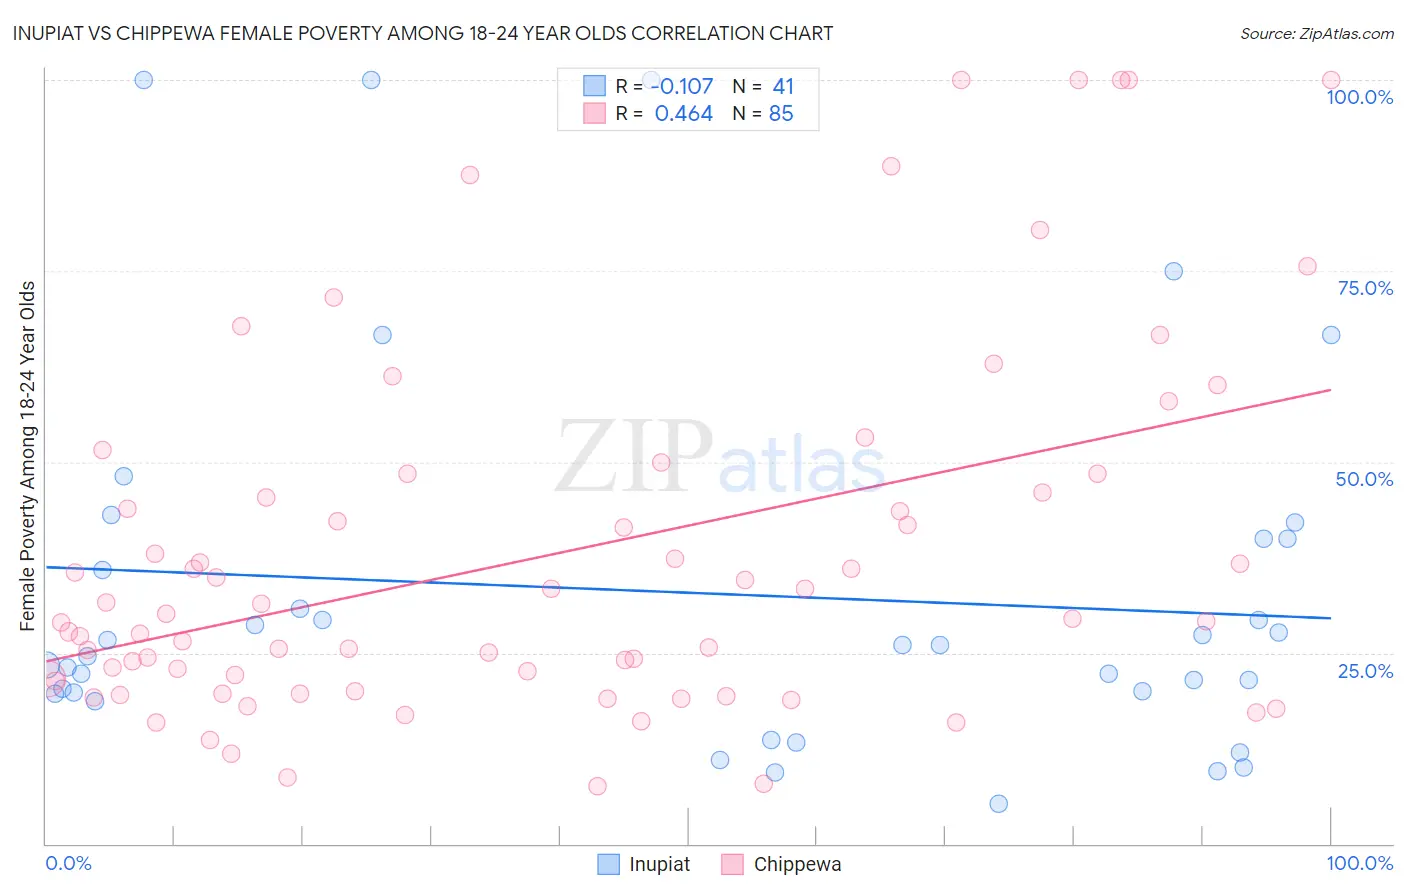 Inupiat vs Chippewa Female Poverty Among 18-24 Year Olds